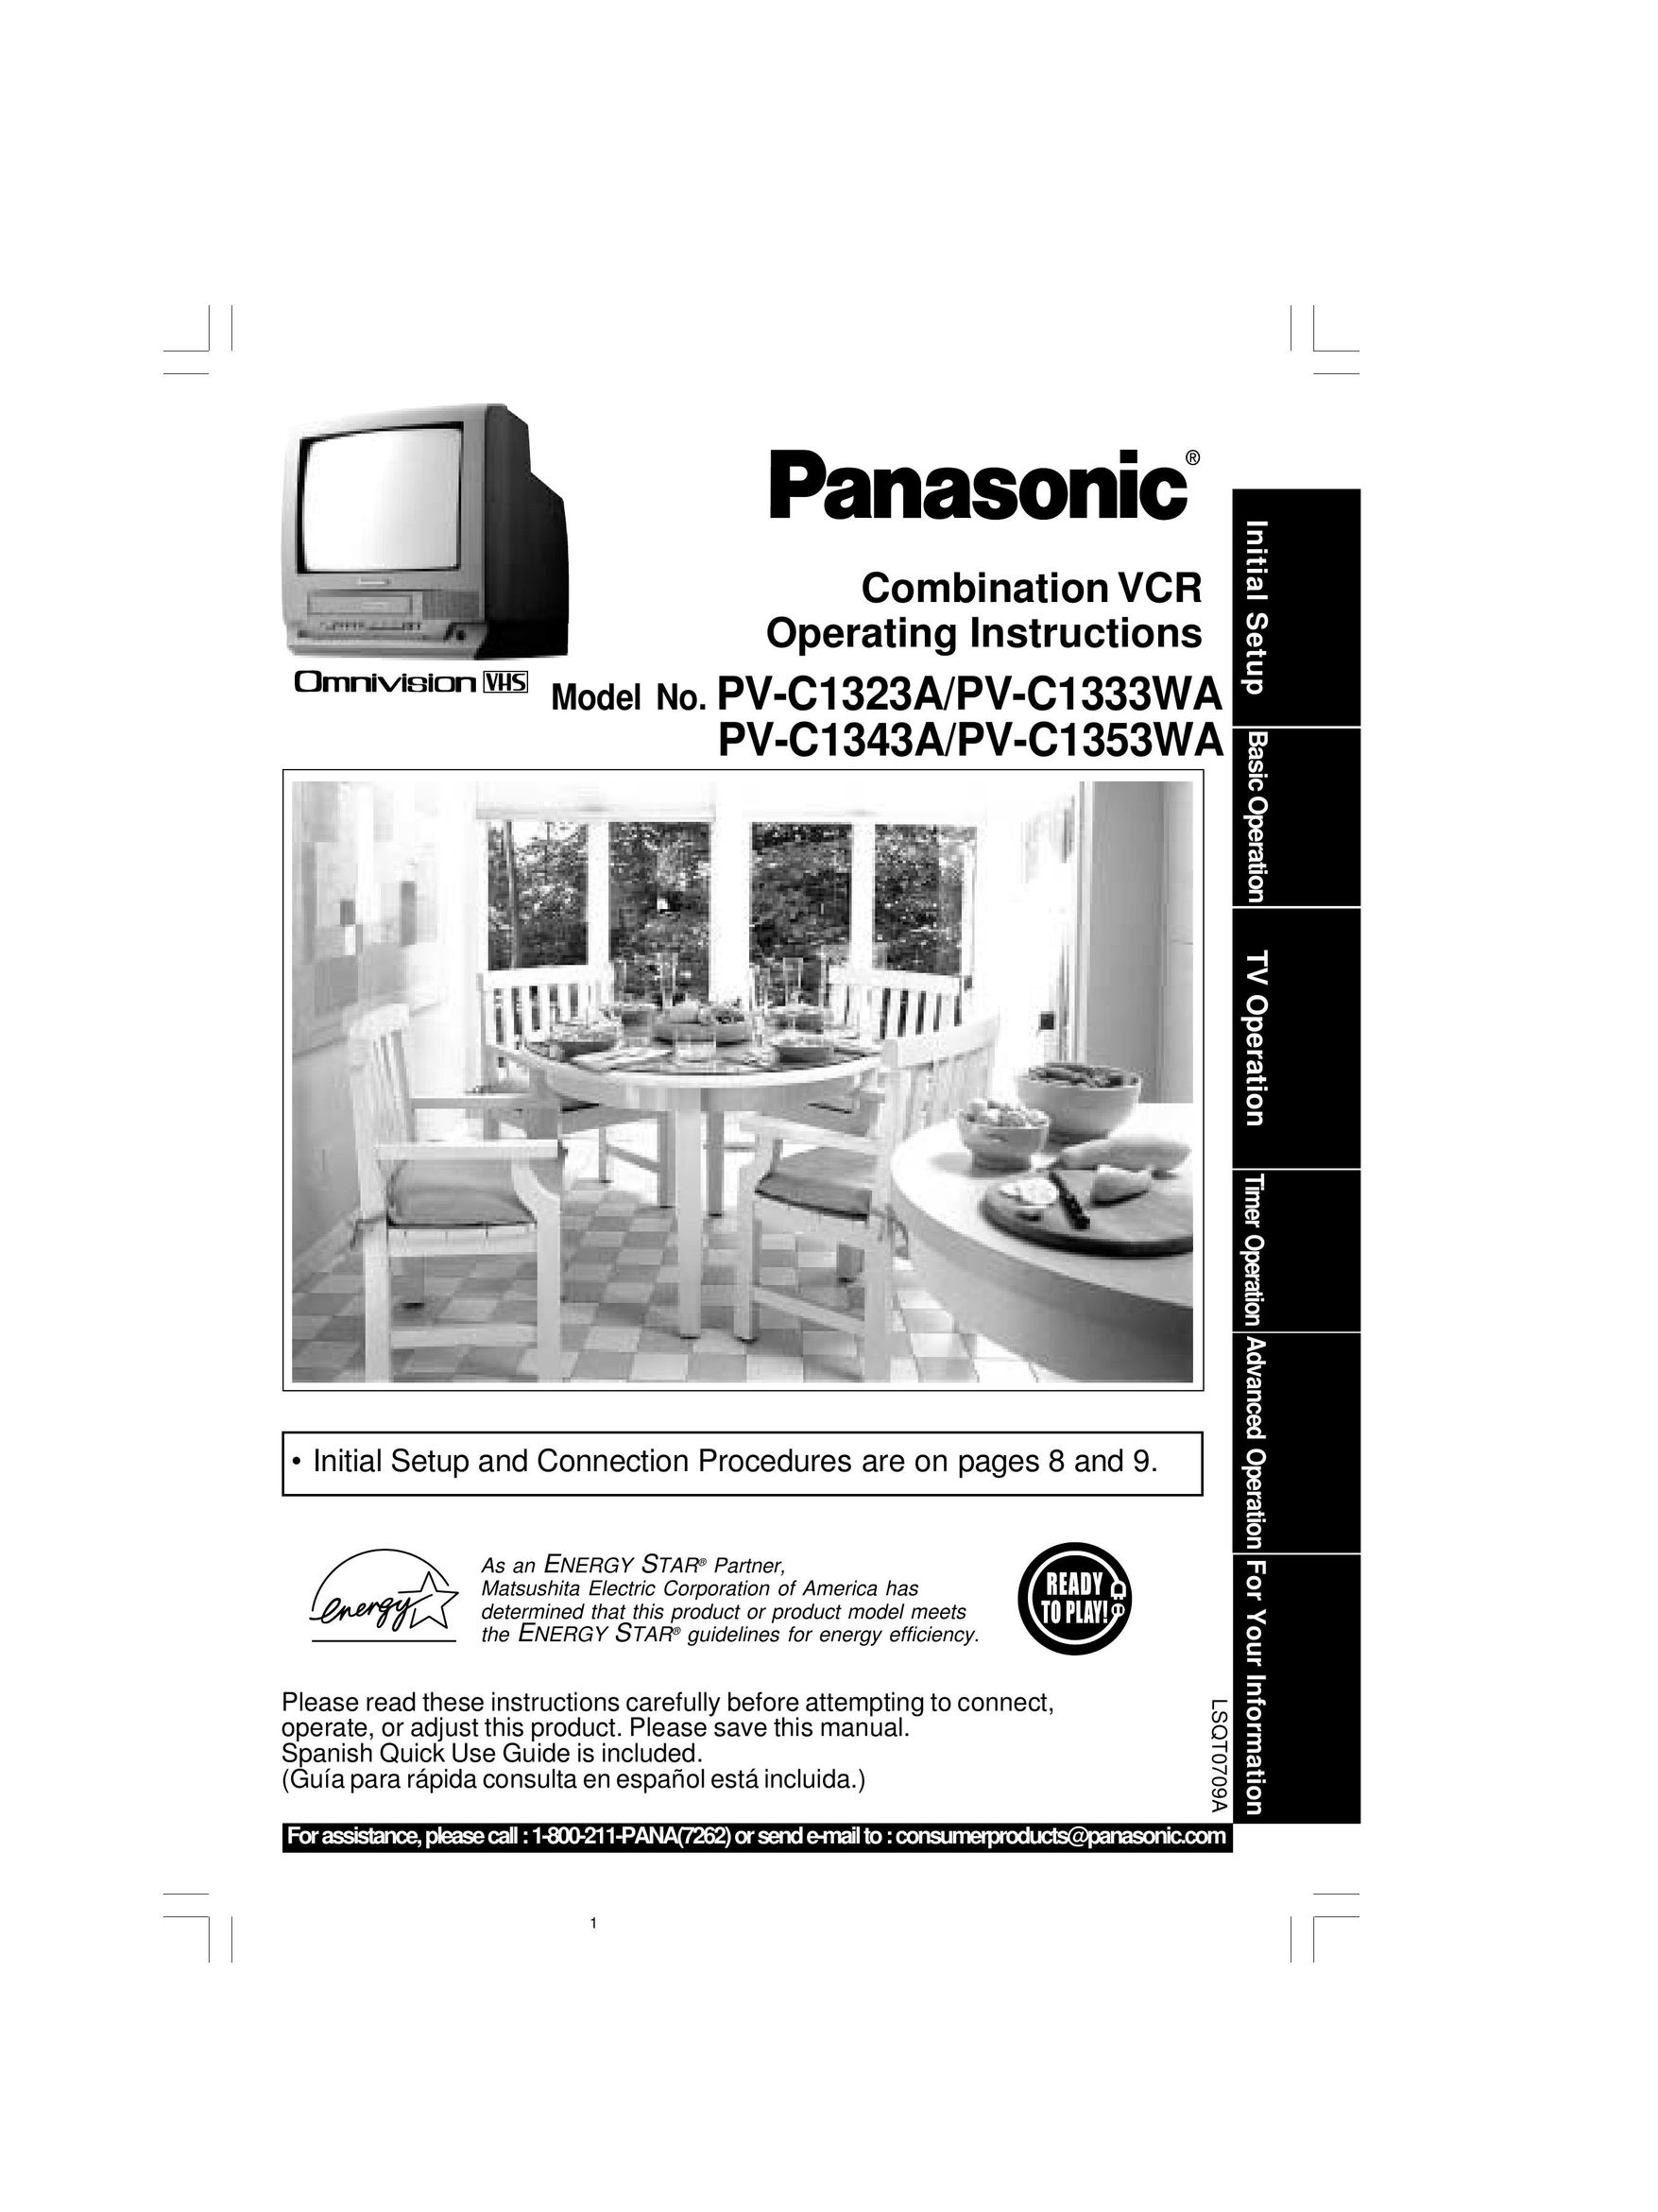 Panasonic PV-C1353WA TV VCR Combo User Manual